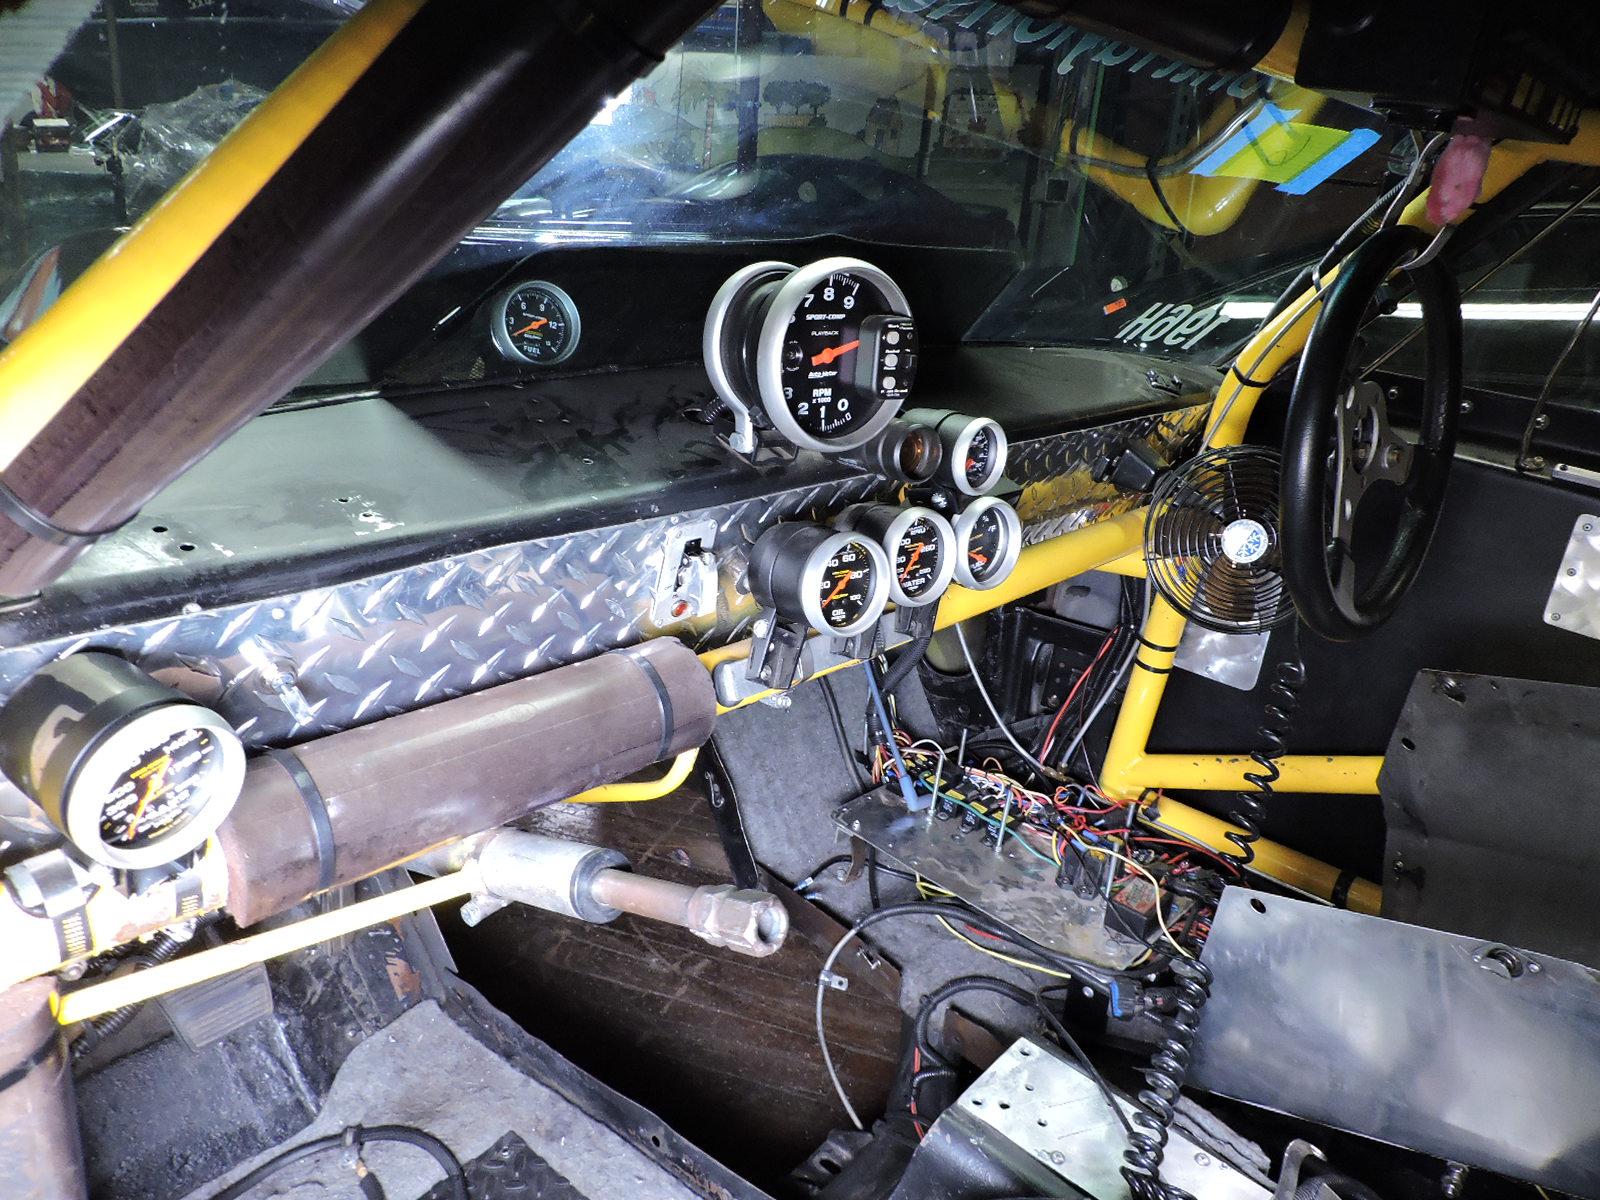 1968 Chevrolet Camaro Drag Car - 2021 Pro Class Champion Winner - 9.8 Sec. 1/4 Mi - SEE NEW VIDEO